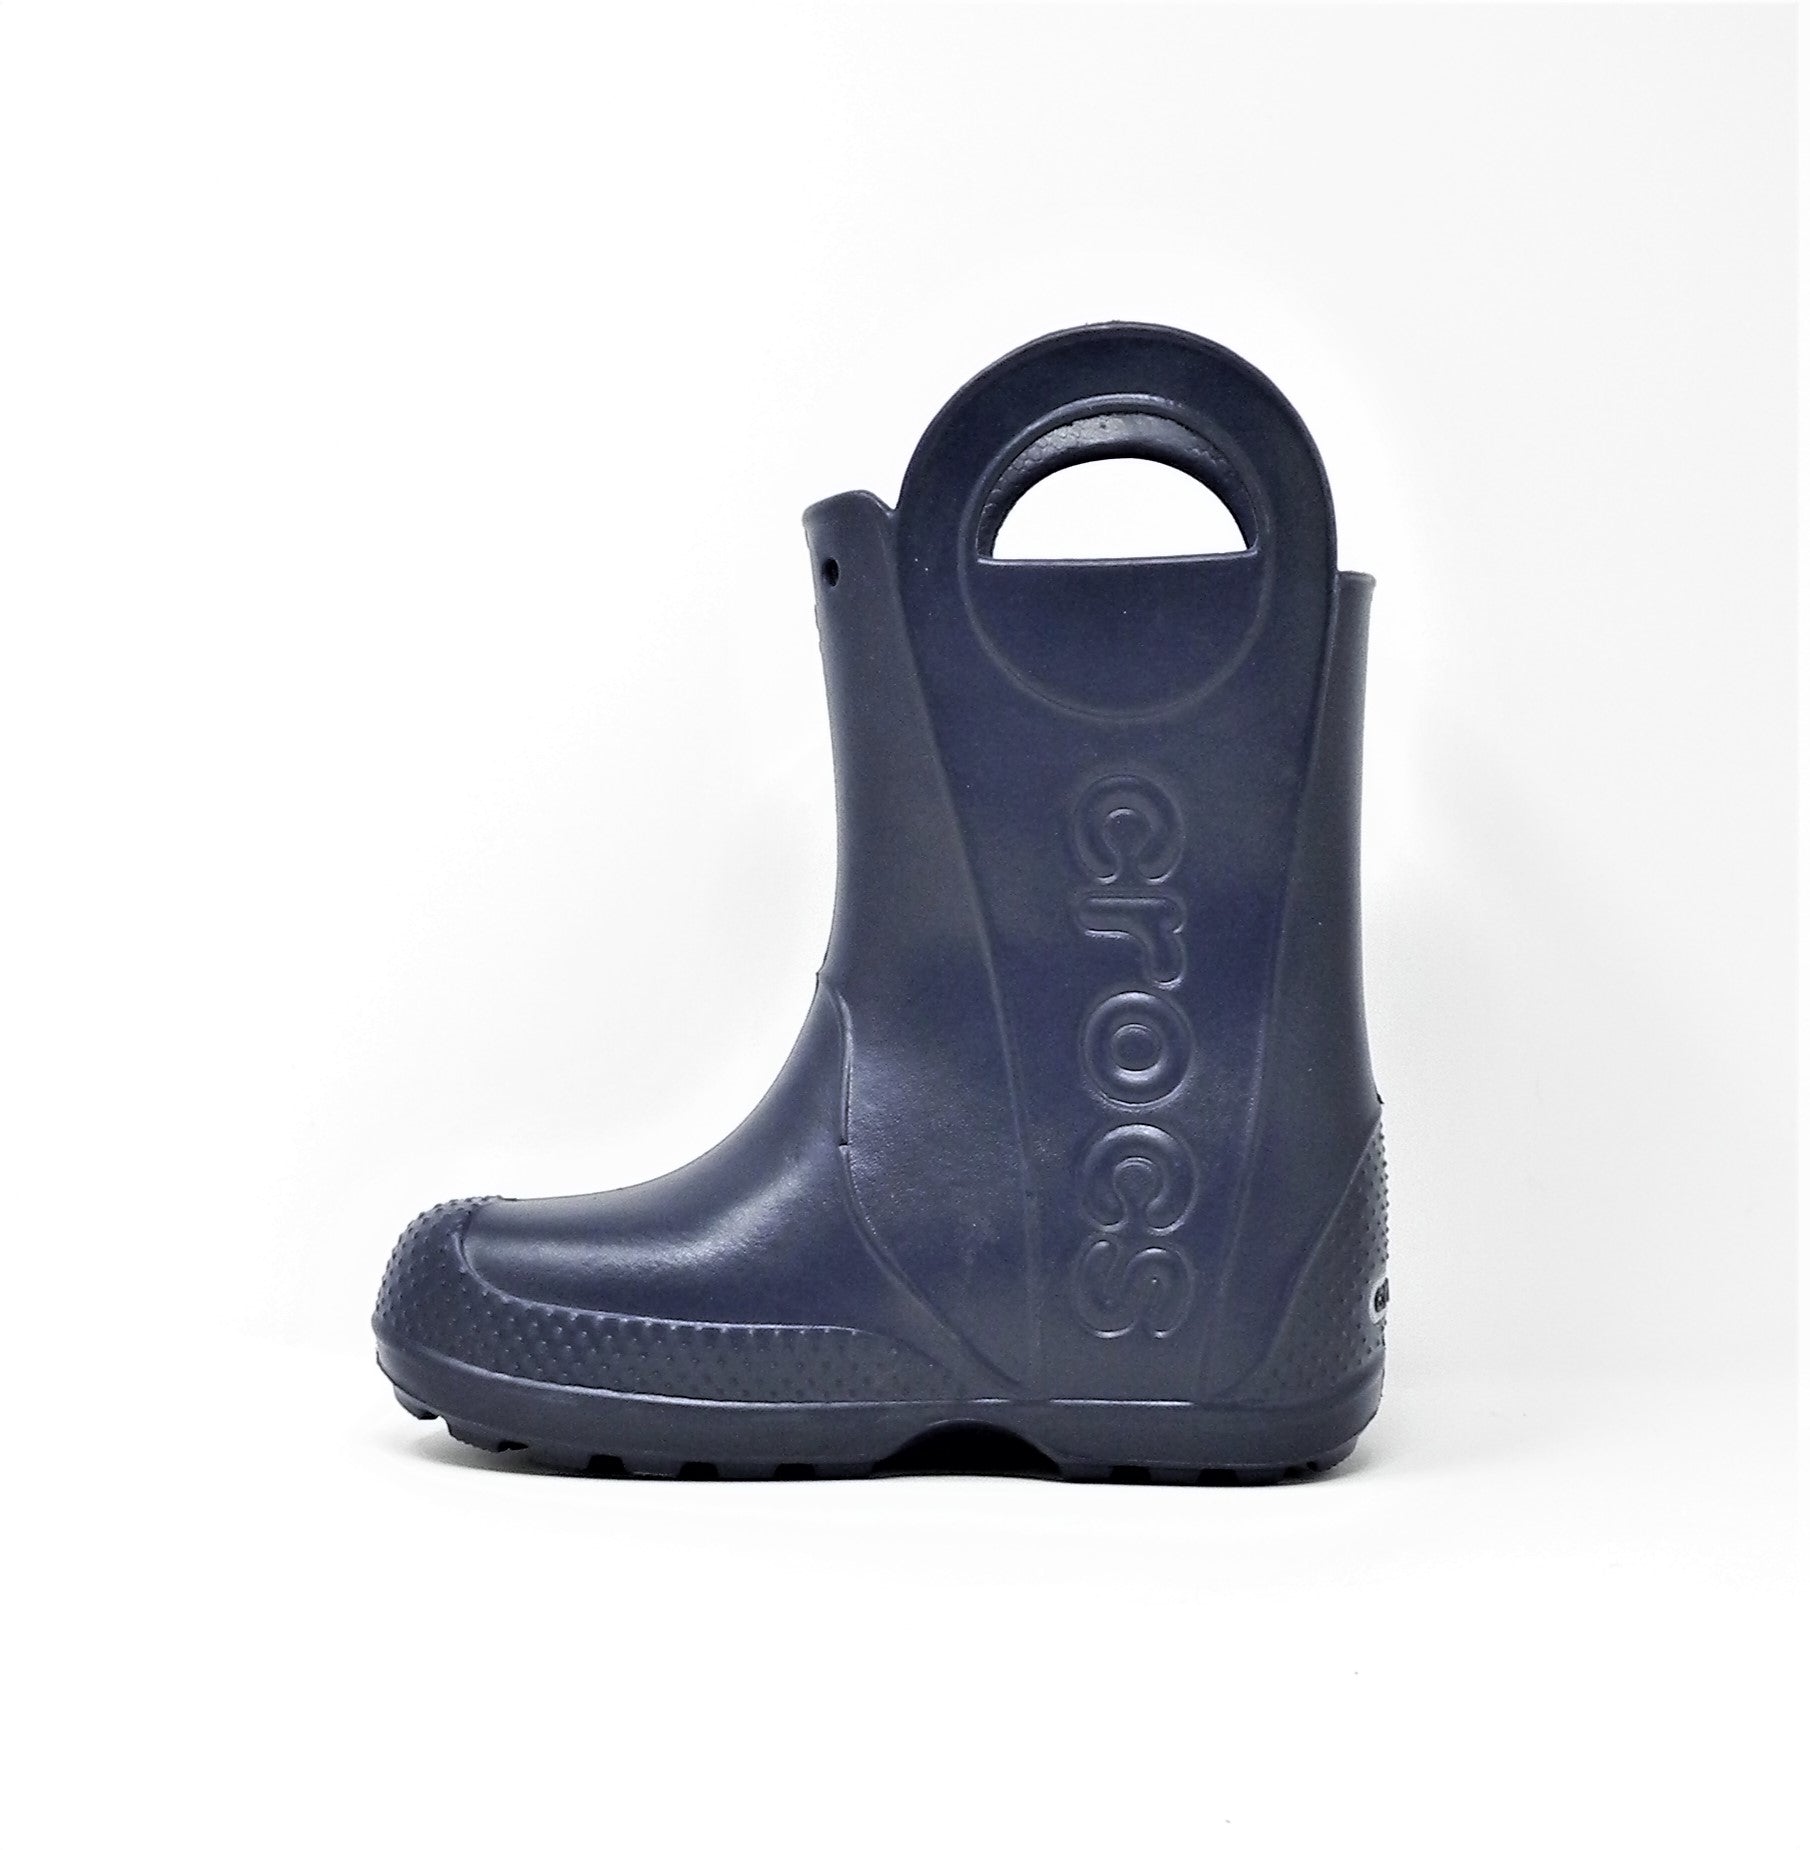 CROCS - Stivaletti pioggia Handle it Rain Boot Kids / Roomy Fit